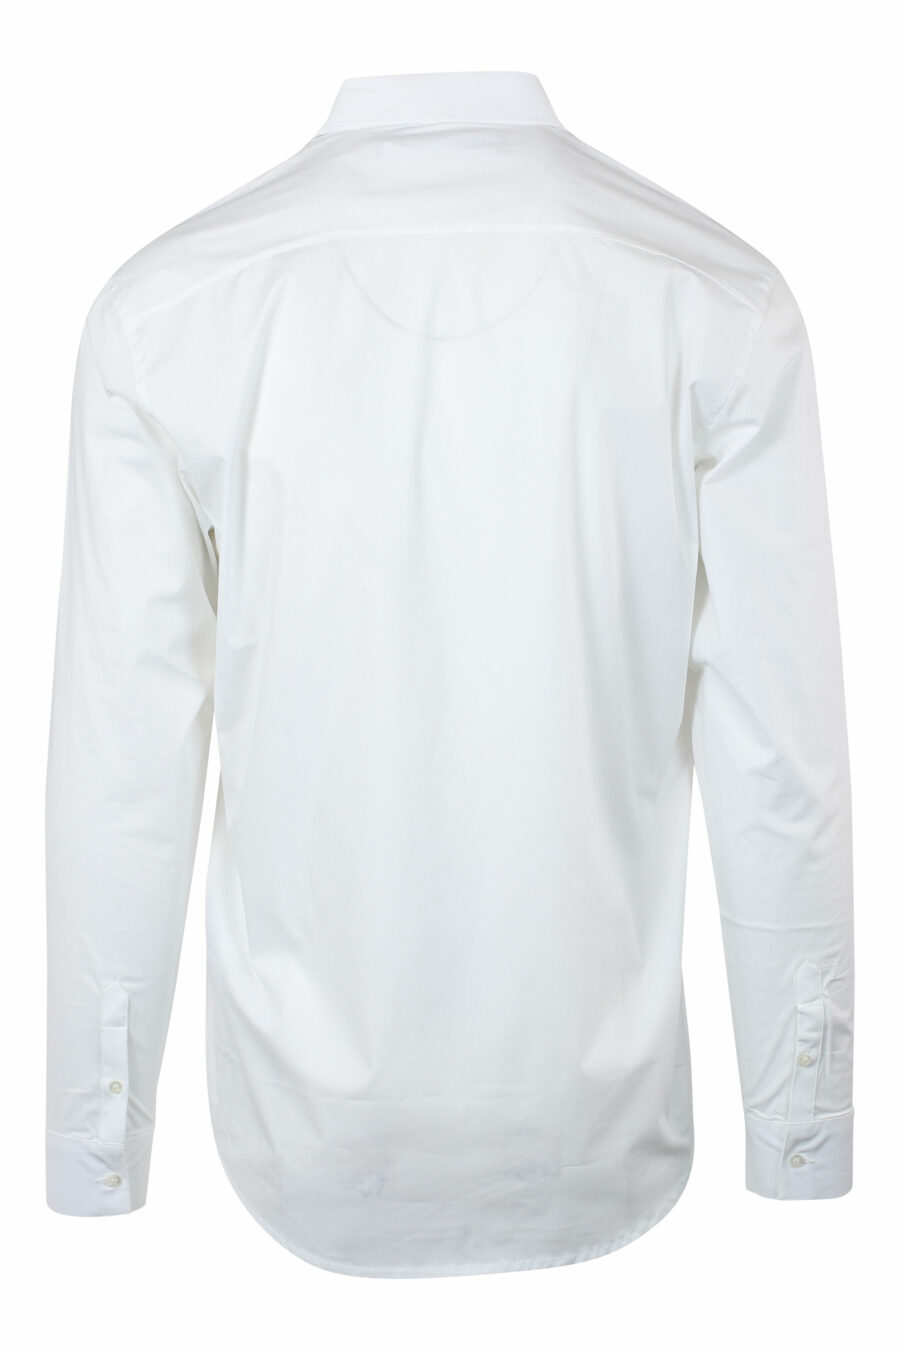 Camisa blanca con minilogo "karl" en silueta negro - IMG 9679